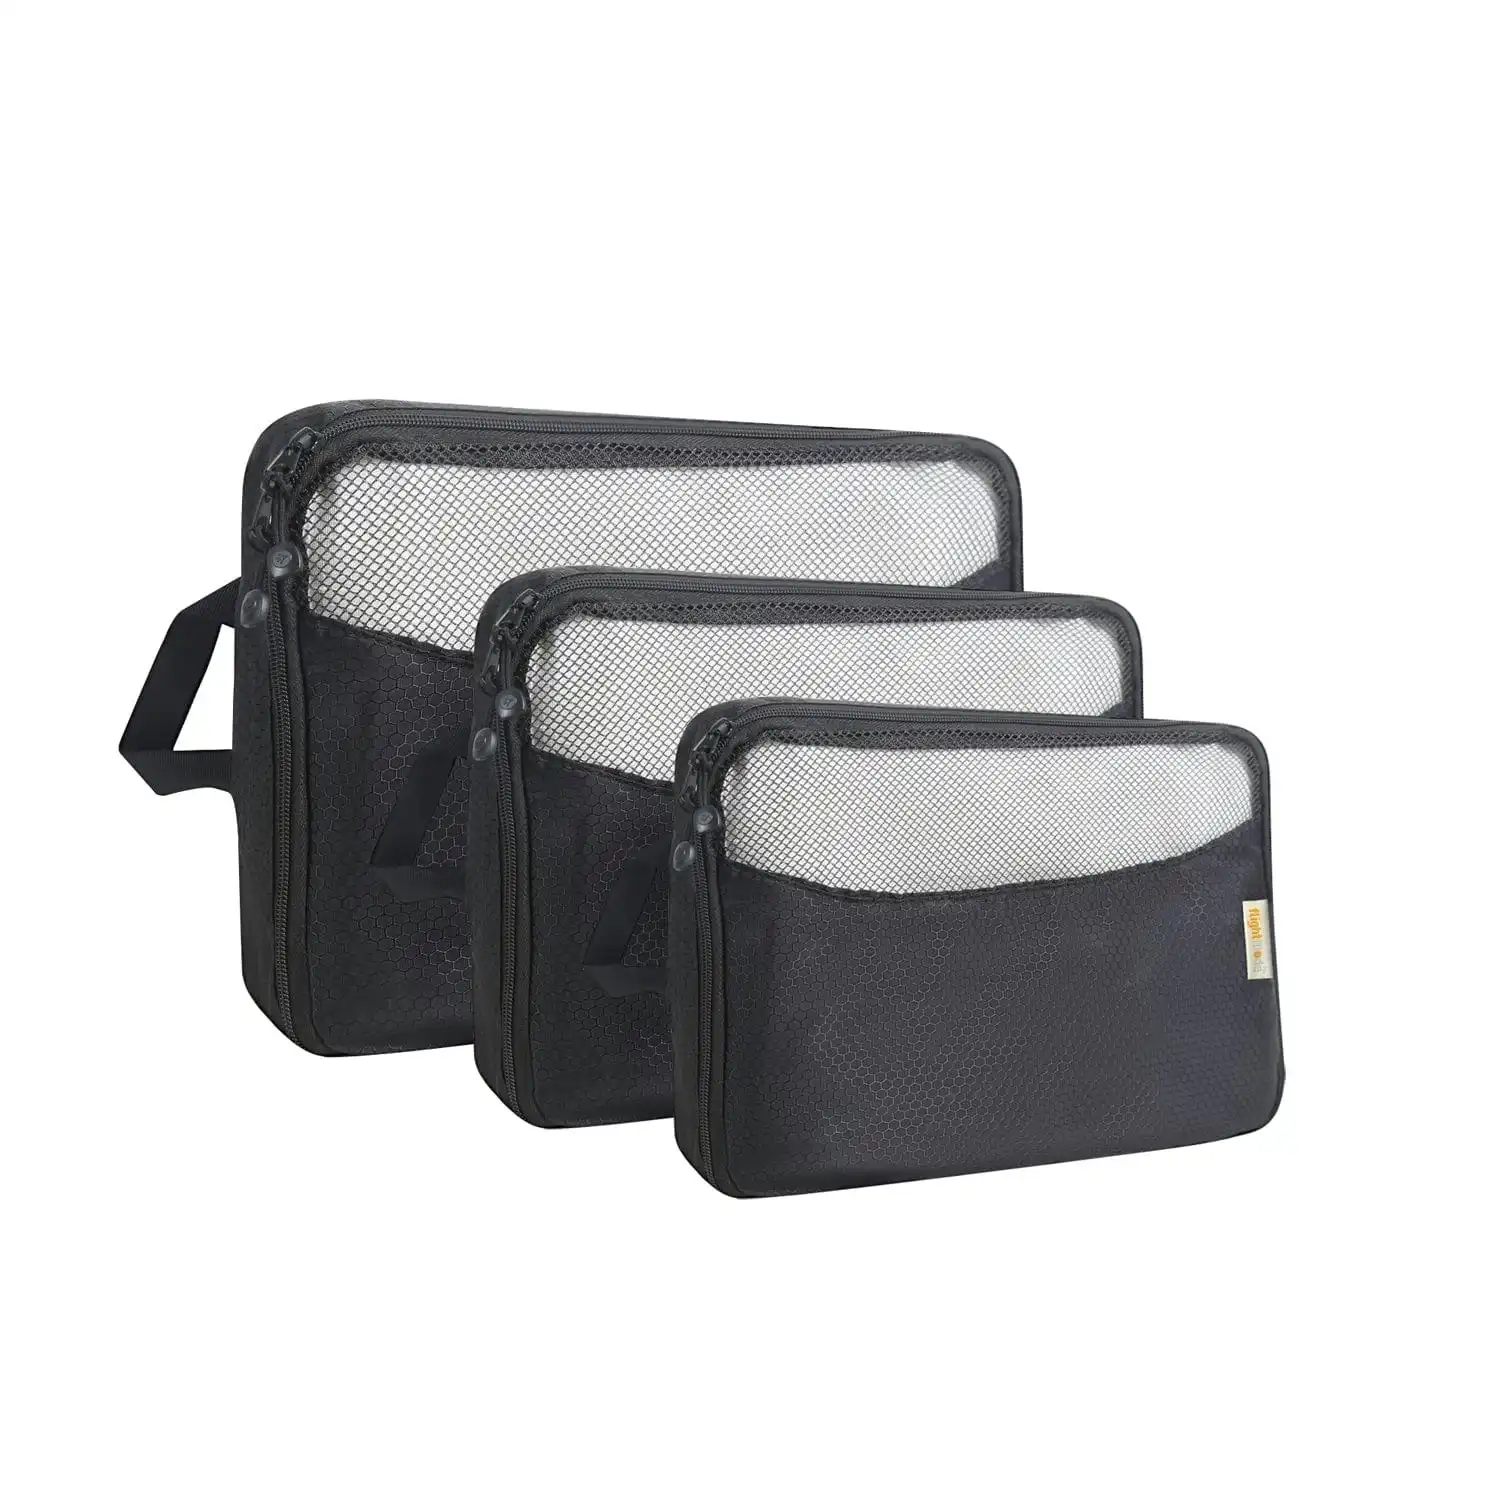 3 Pcs Travel Luggage Waterproof Organizer Storage Set